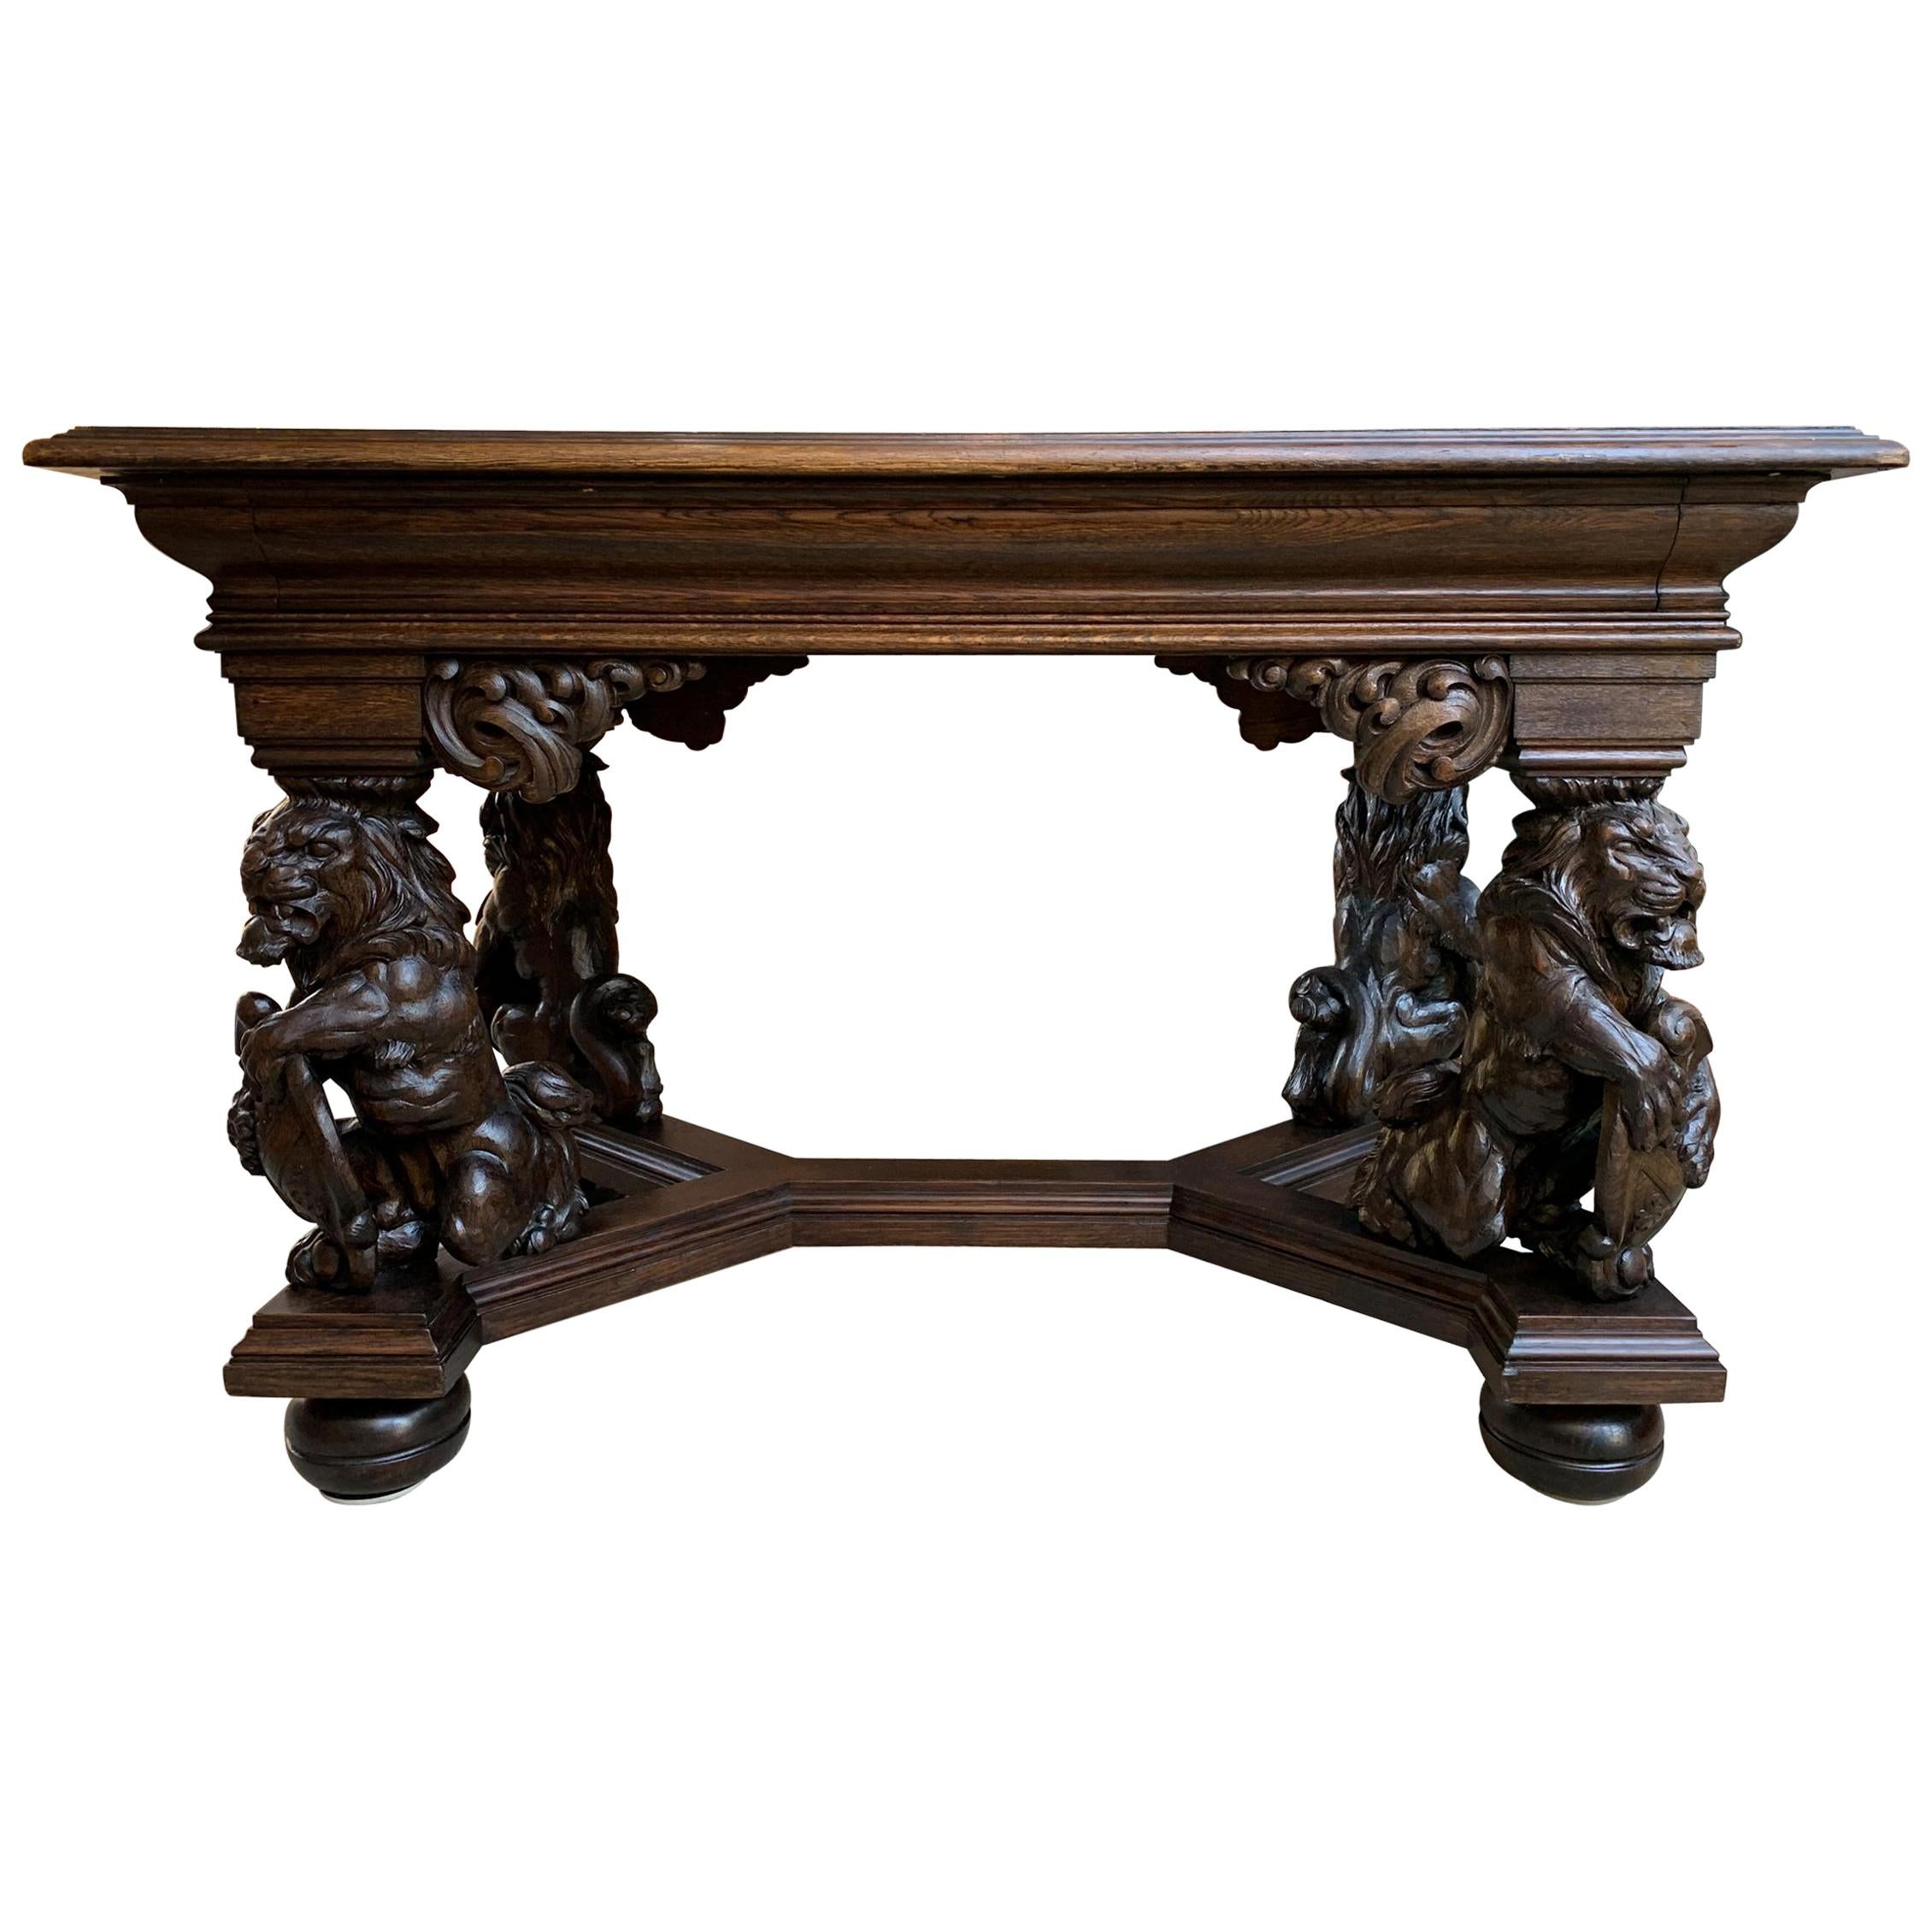 19th century French Carved Oak Desk Library Table Lion Crest Renaissance Baroque